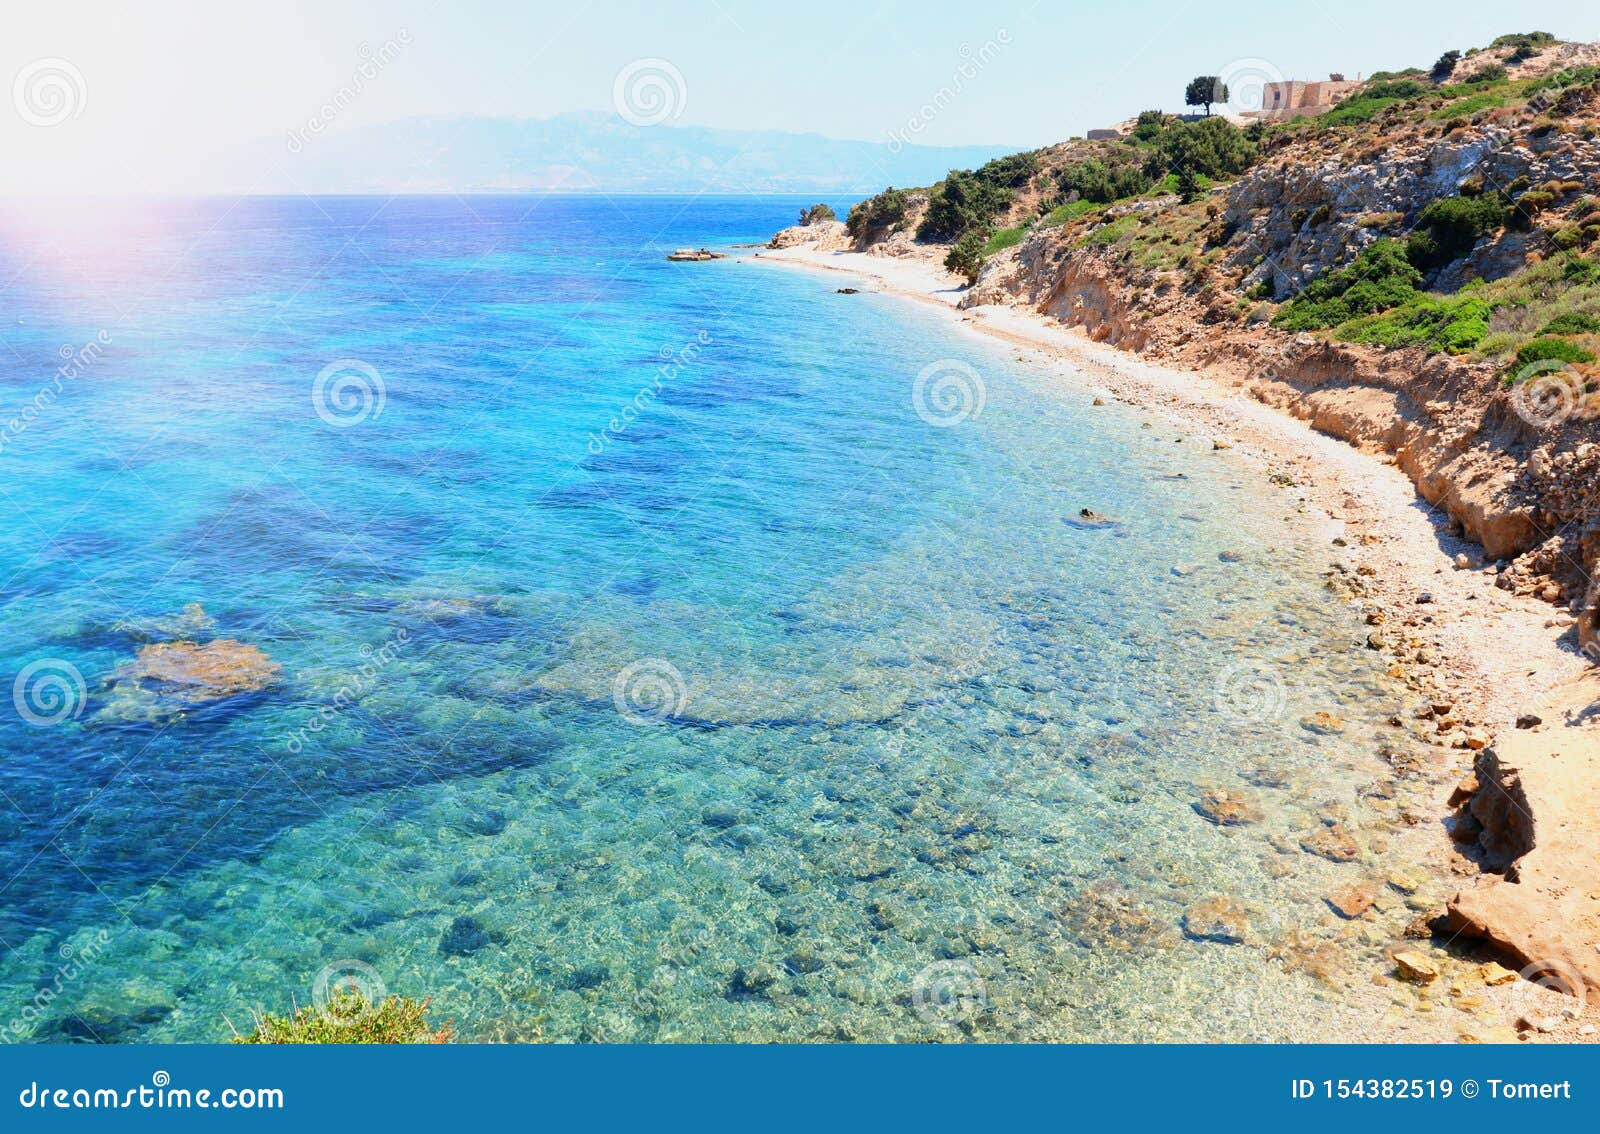 beautiful mediterranean sea